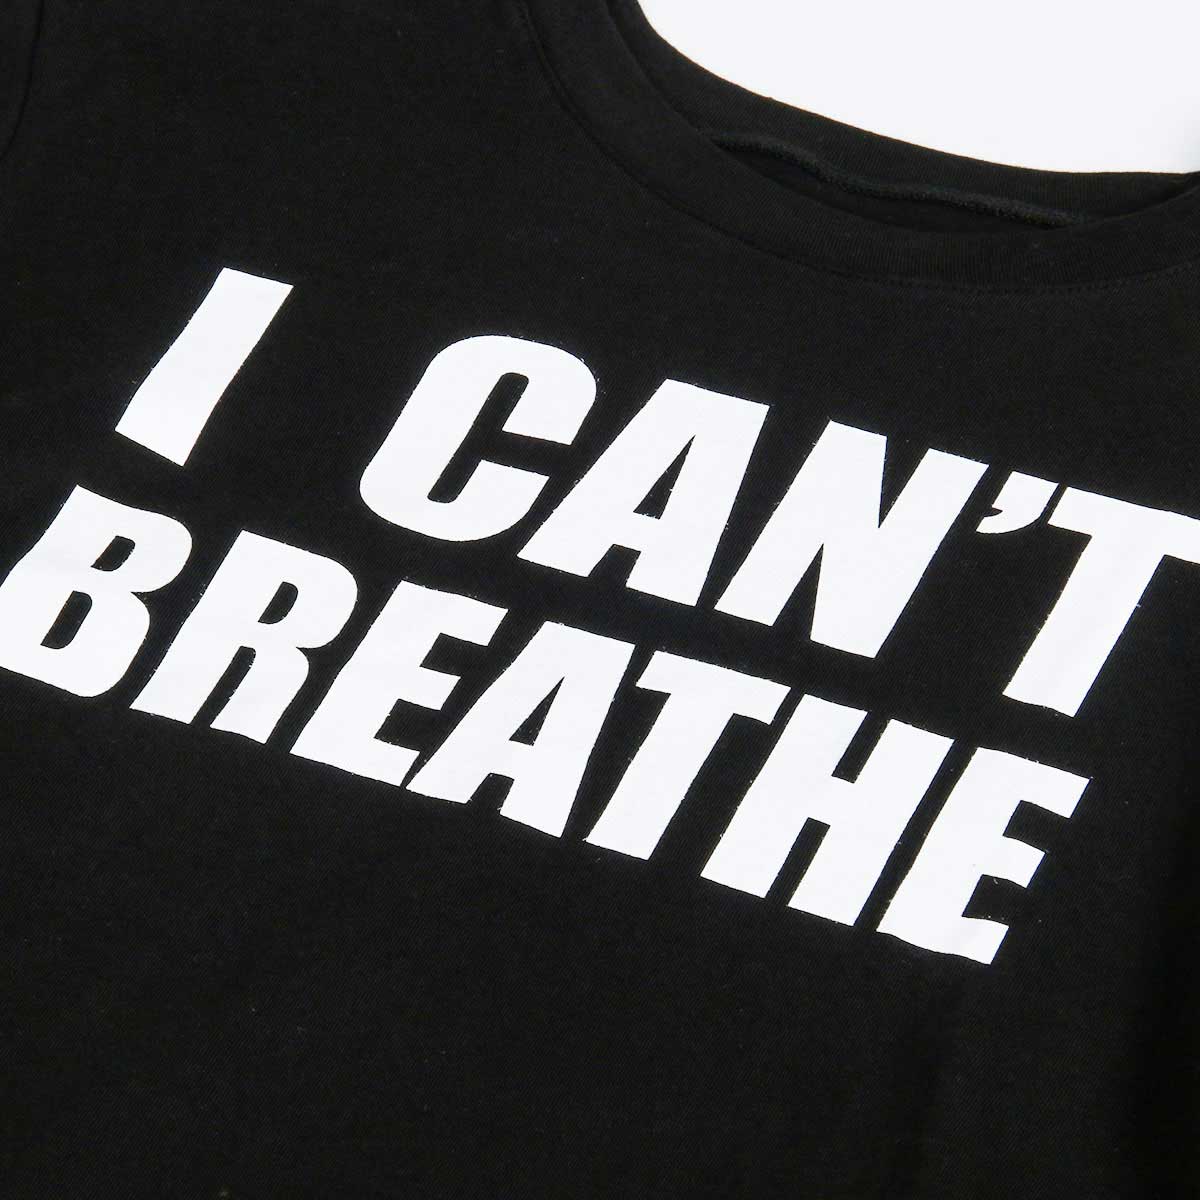 I Cant Breathe Mens Shirts Protest Tees Black Lives Matter